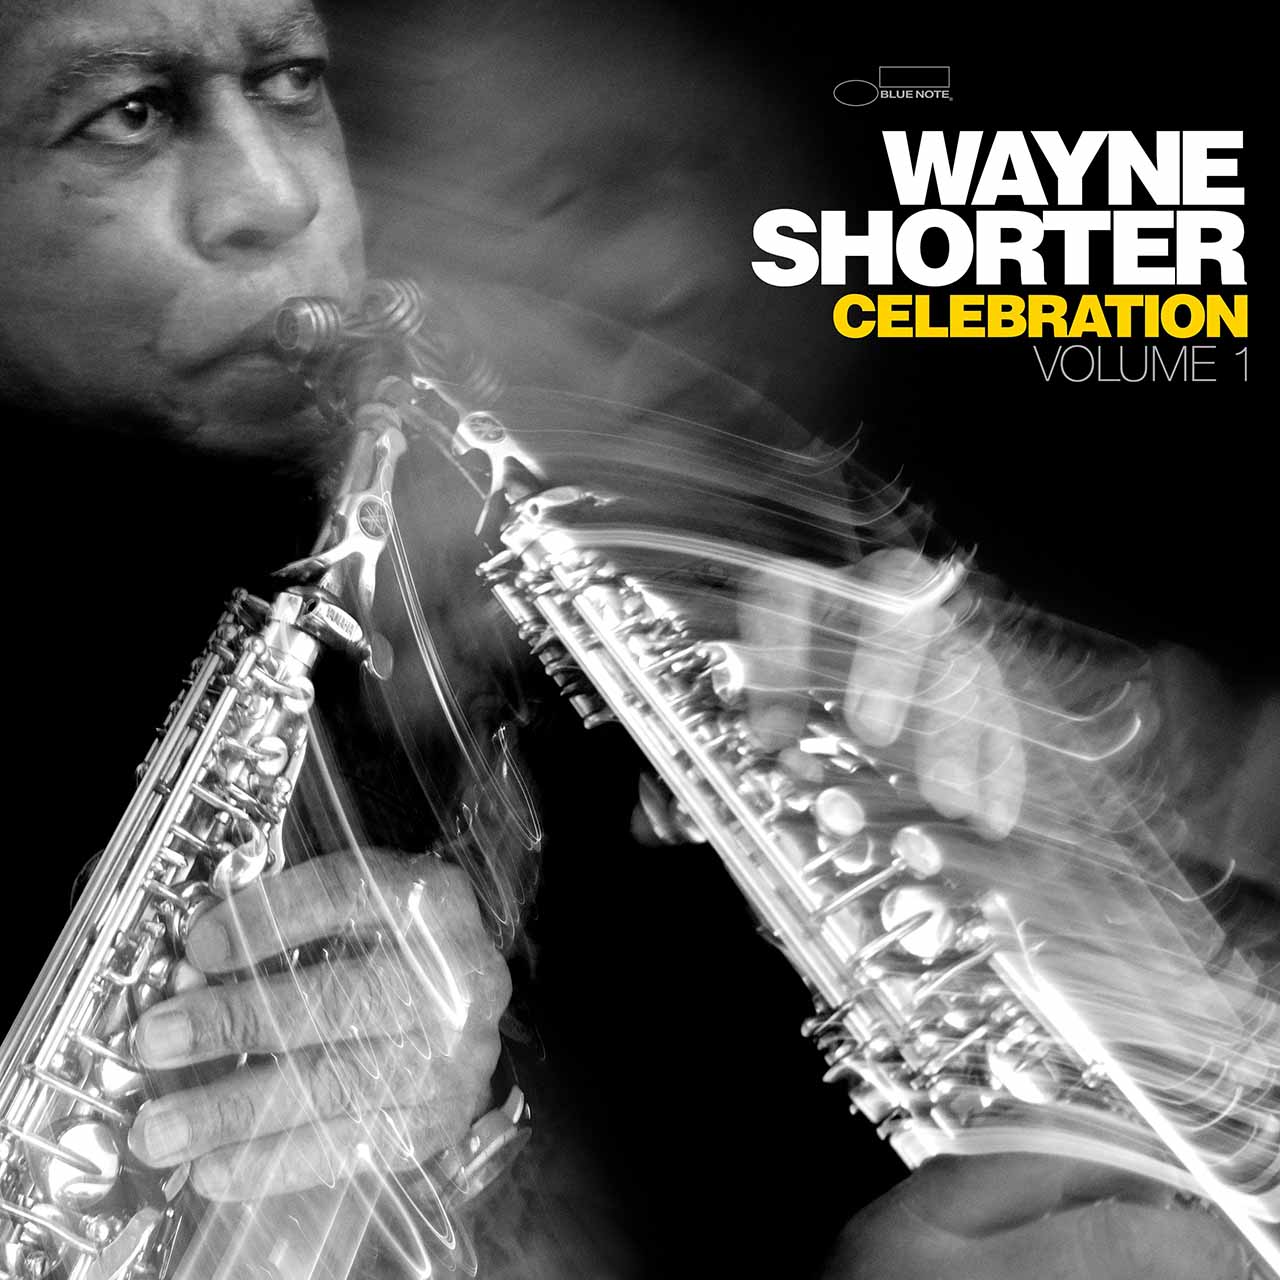 Blue Note Records Announces New Wayne Shorter Collection